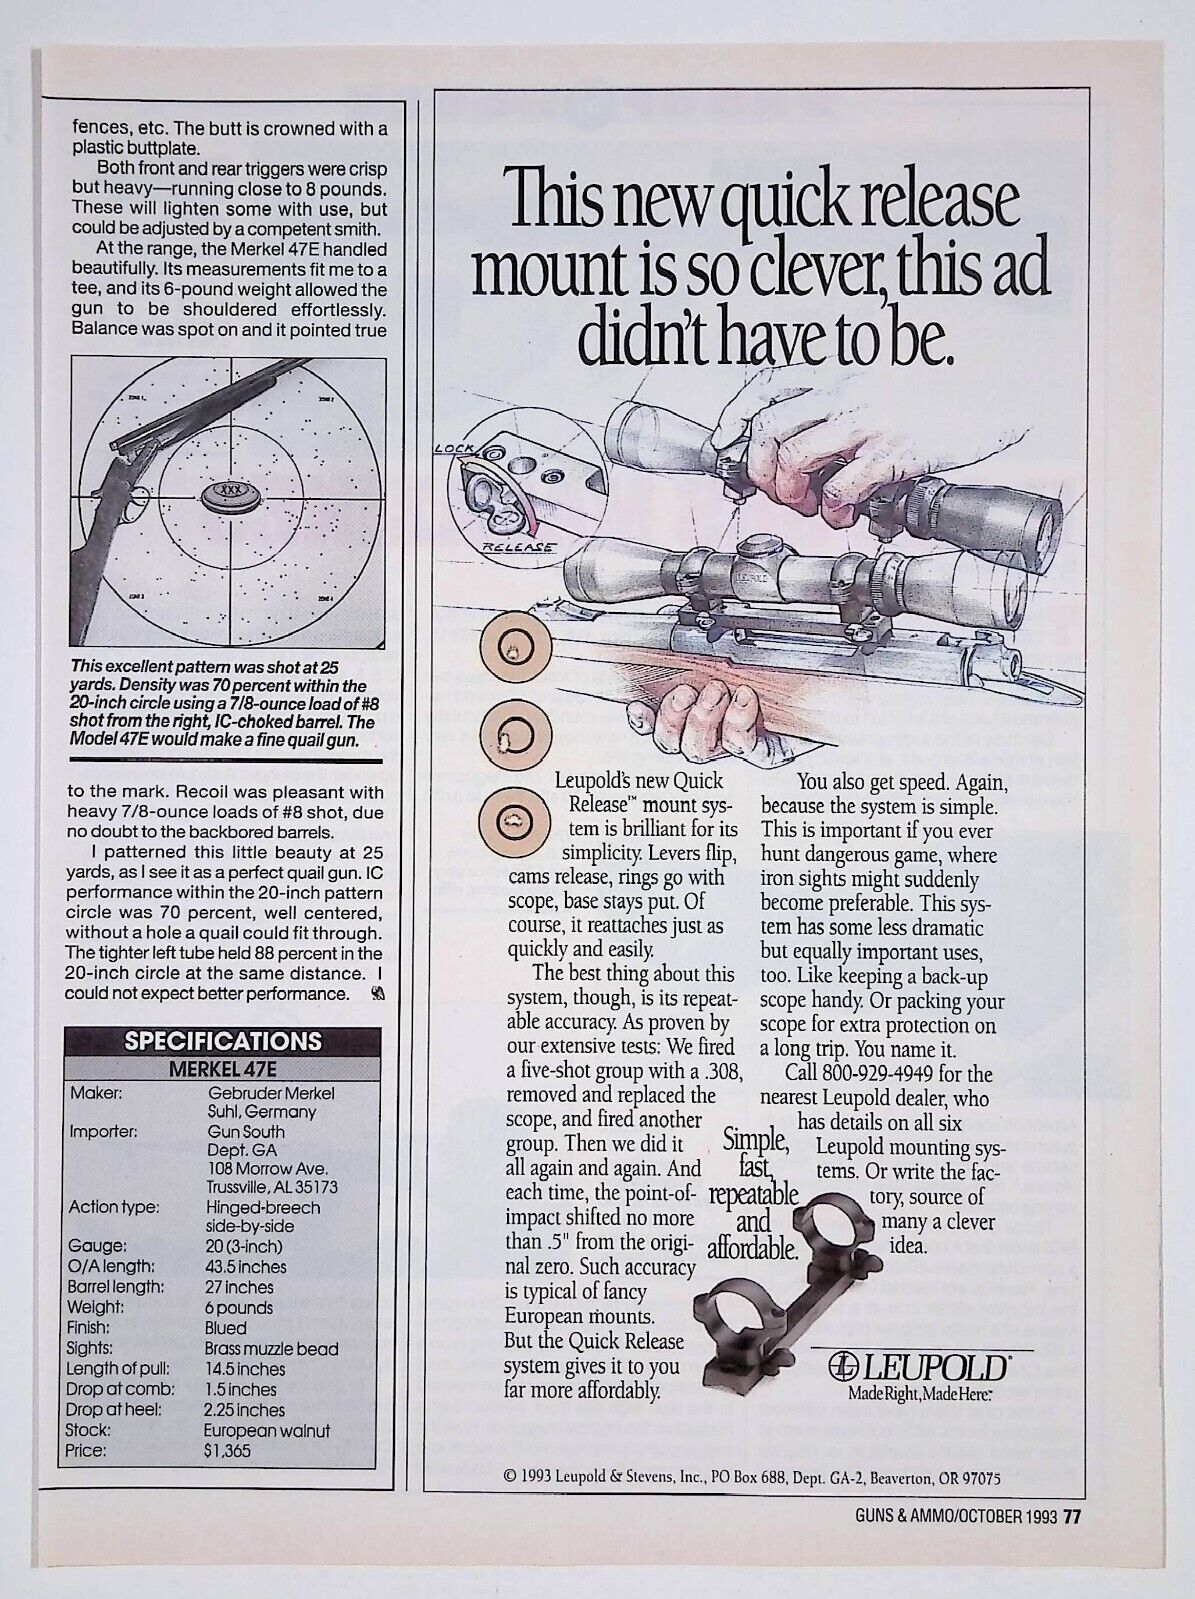 Leupold Scope Advertising Print Ad Guns & Ammo Magazine October 1993